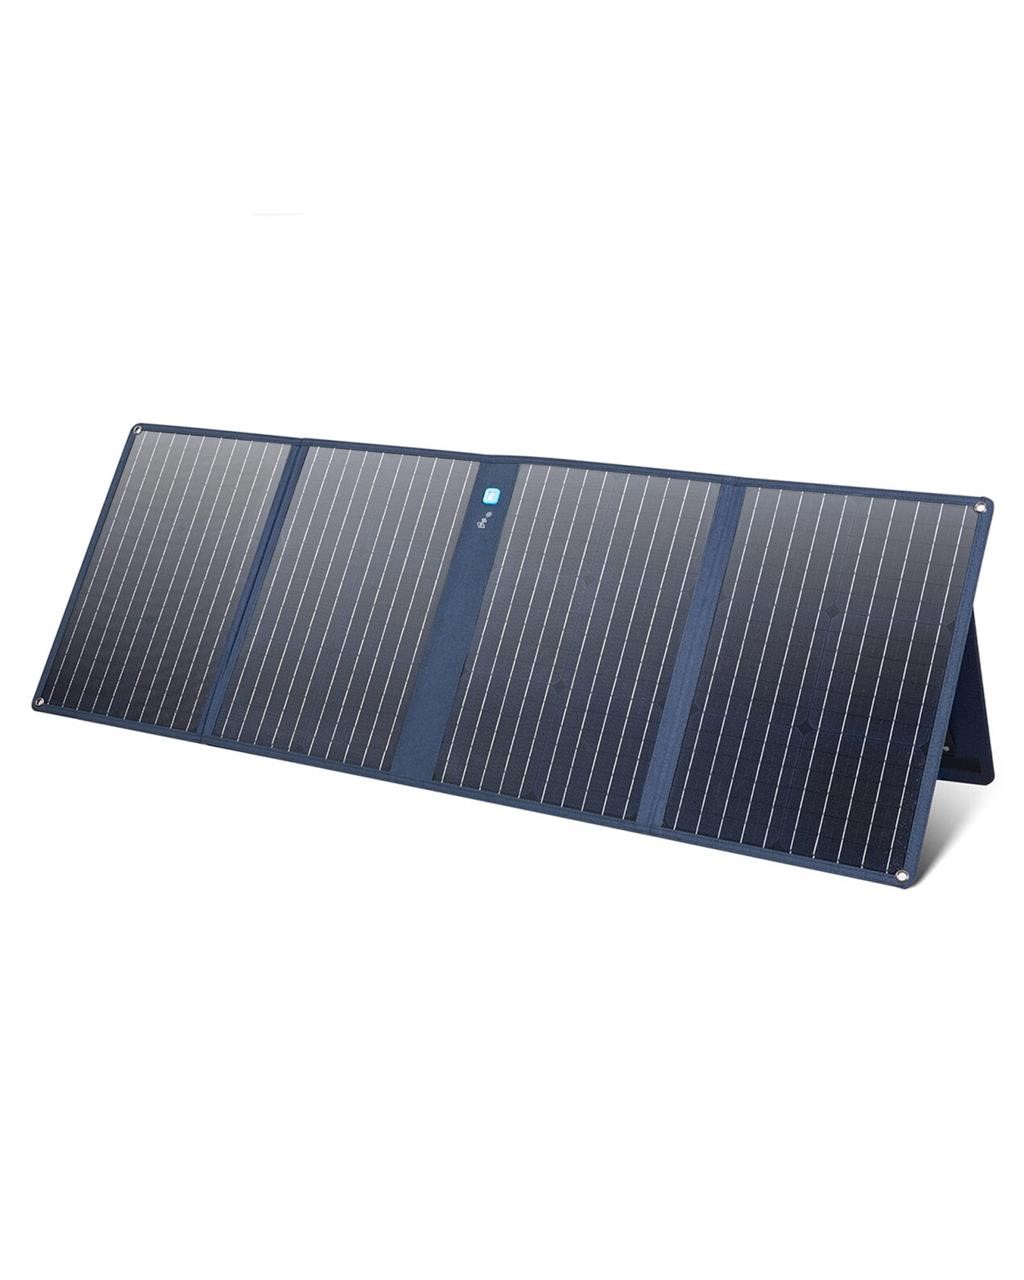 Anker 625 Solar Panel with Adjustable Kickstand,